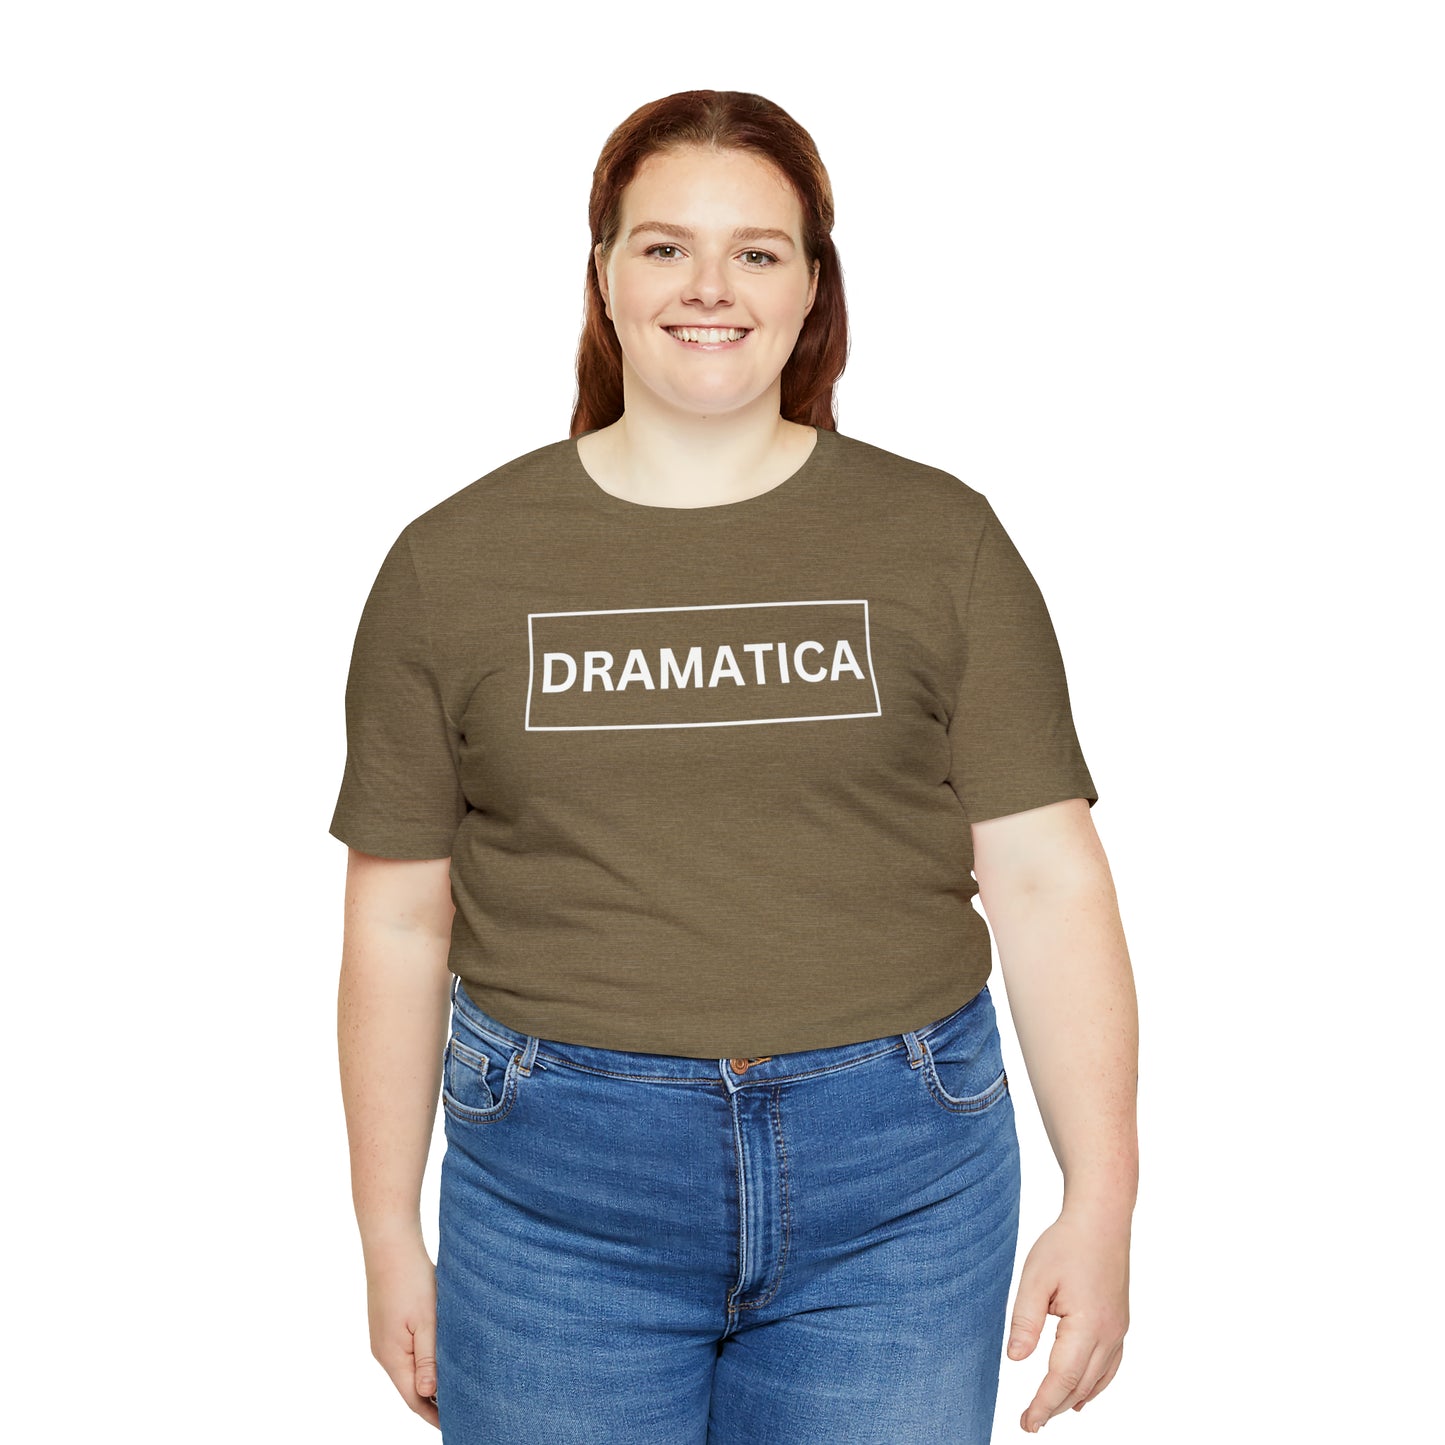 Dramatica, Shirt